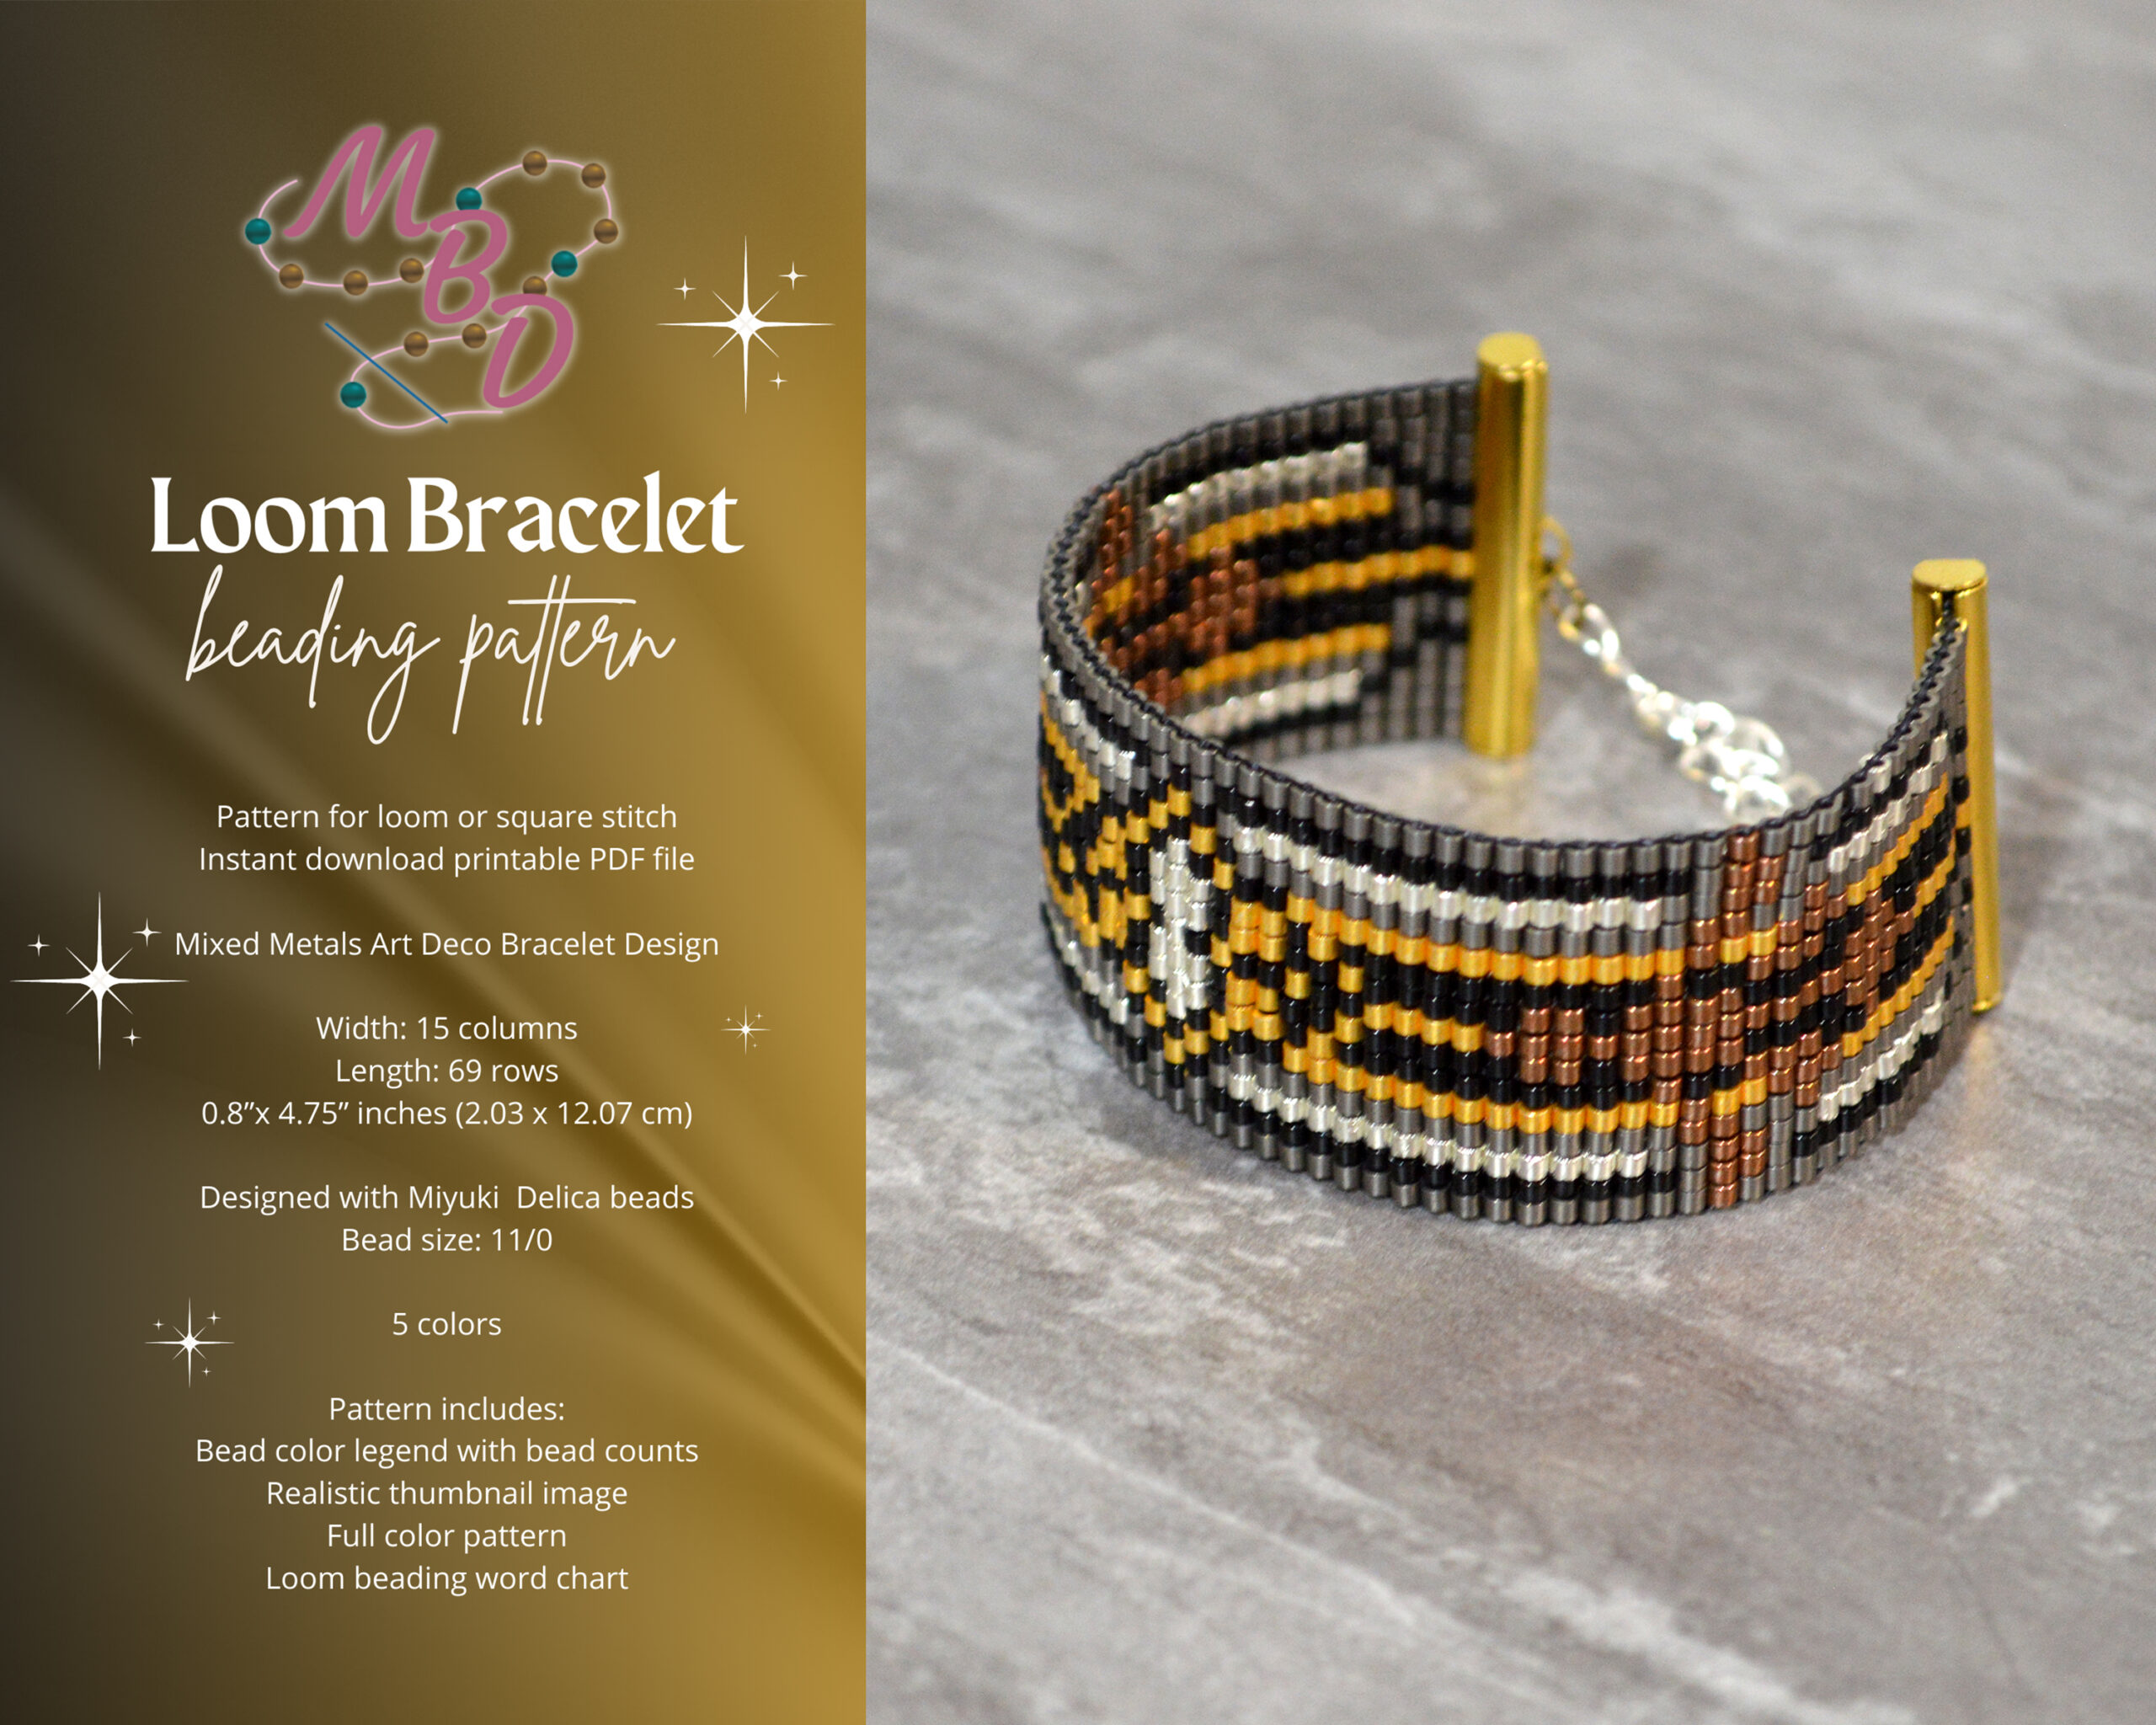 Mixed Metals Art Deco Loom Bracelet Pattern - Megan's Beaded Designs